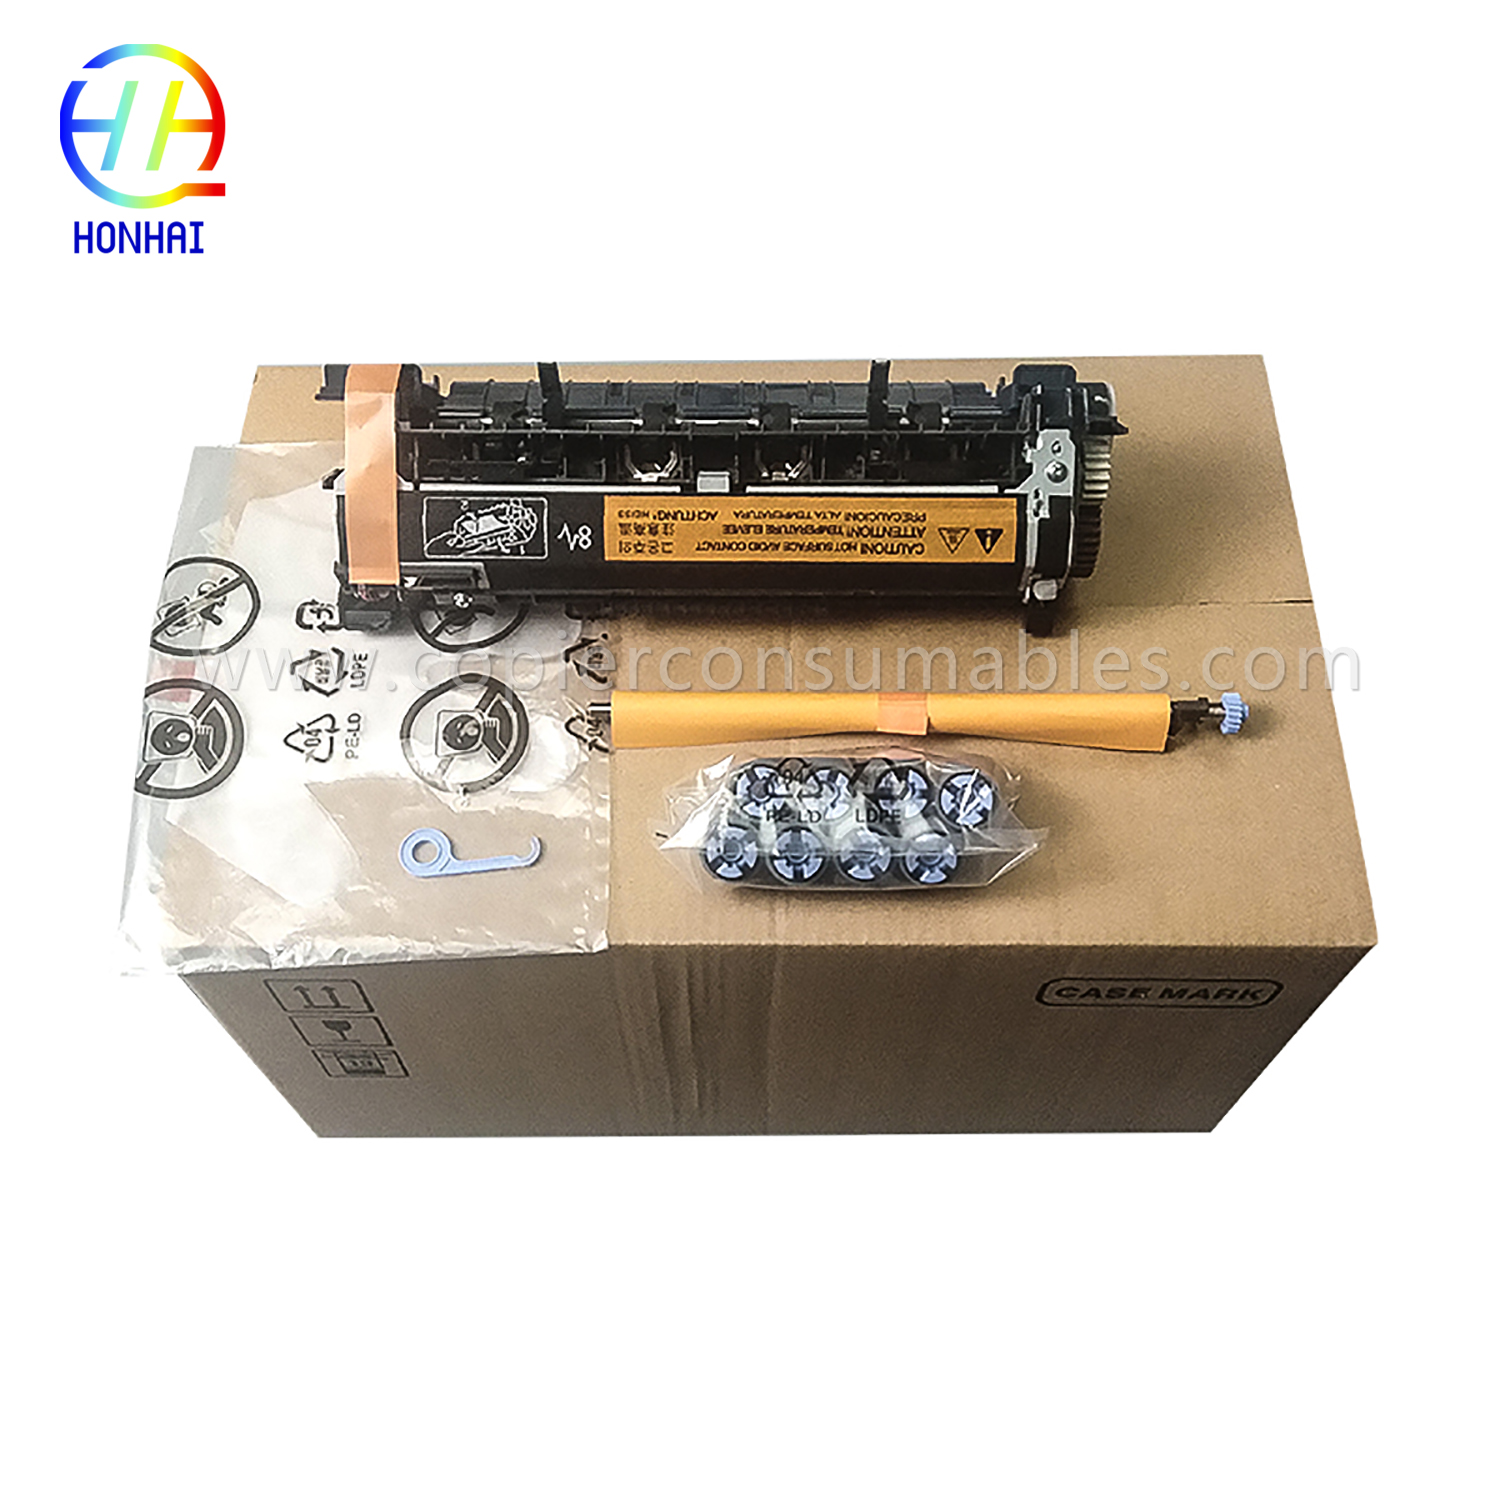 Maintenance Kit for HP P4015 4014 Original Quality 拷贝